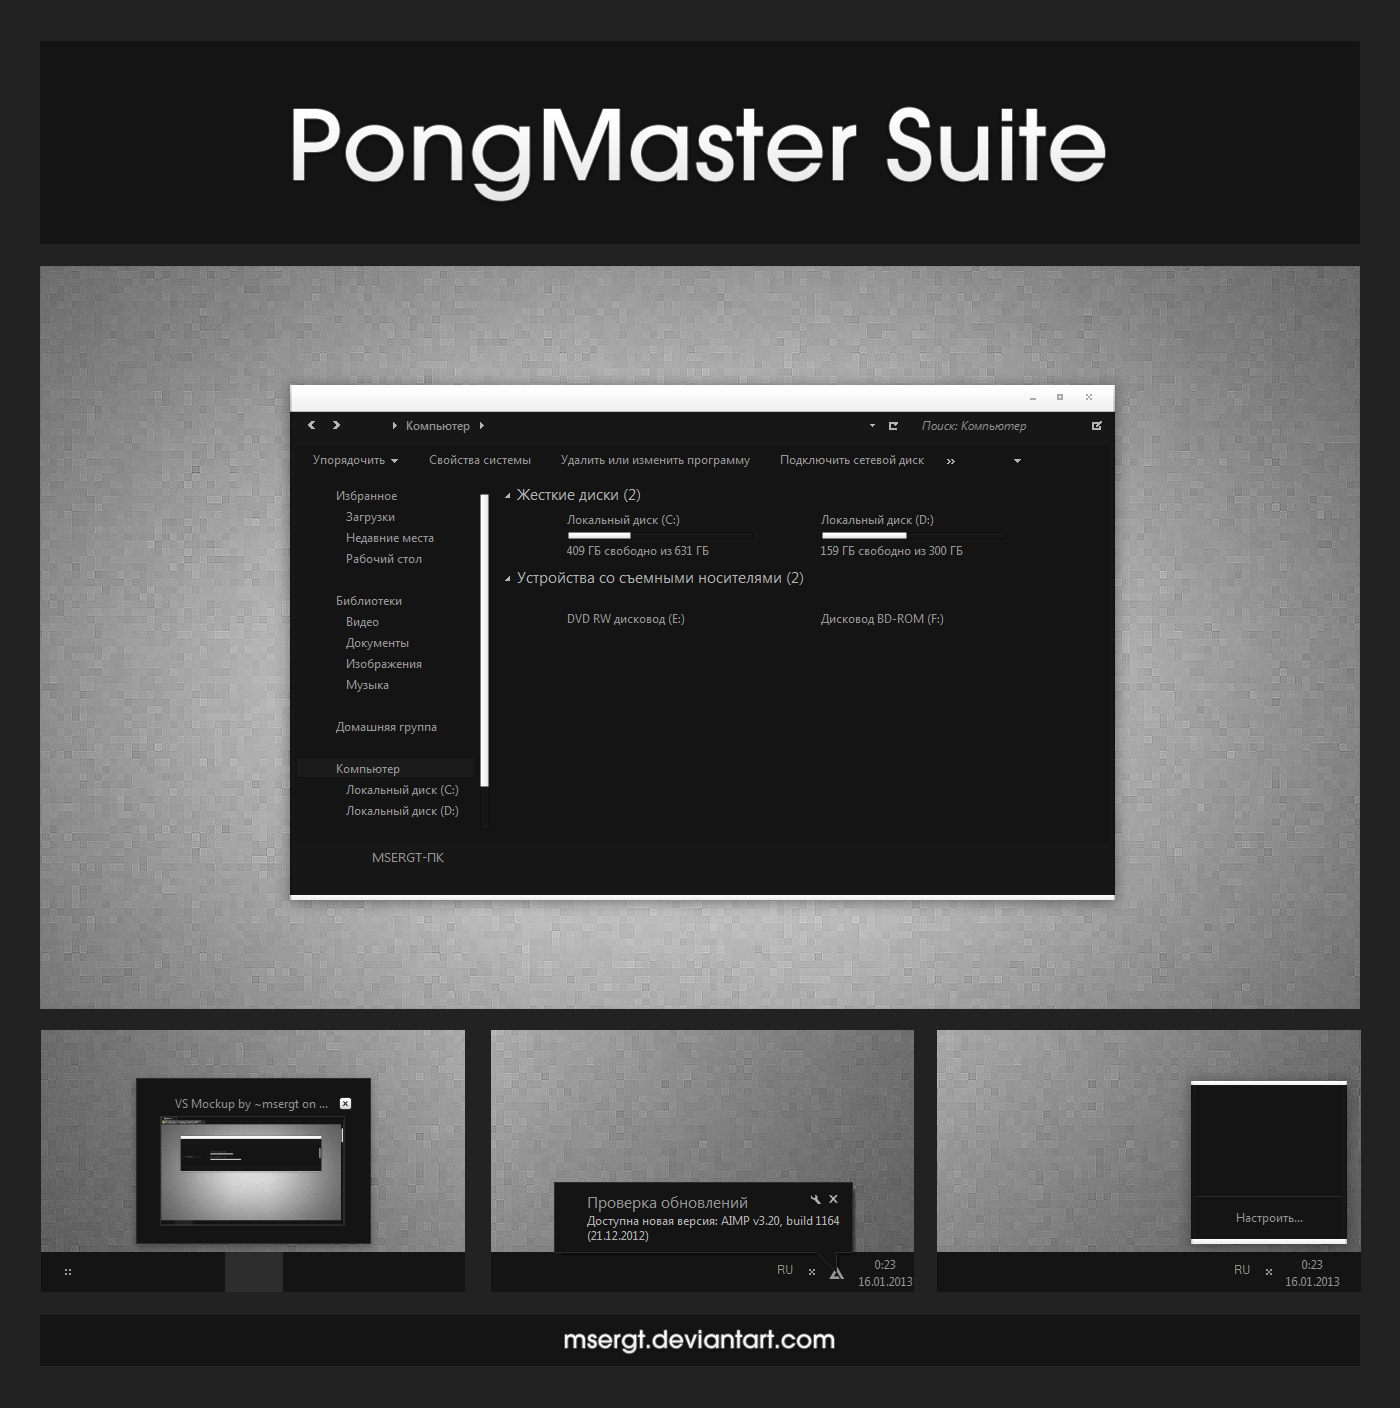 PongMaster Suite